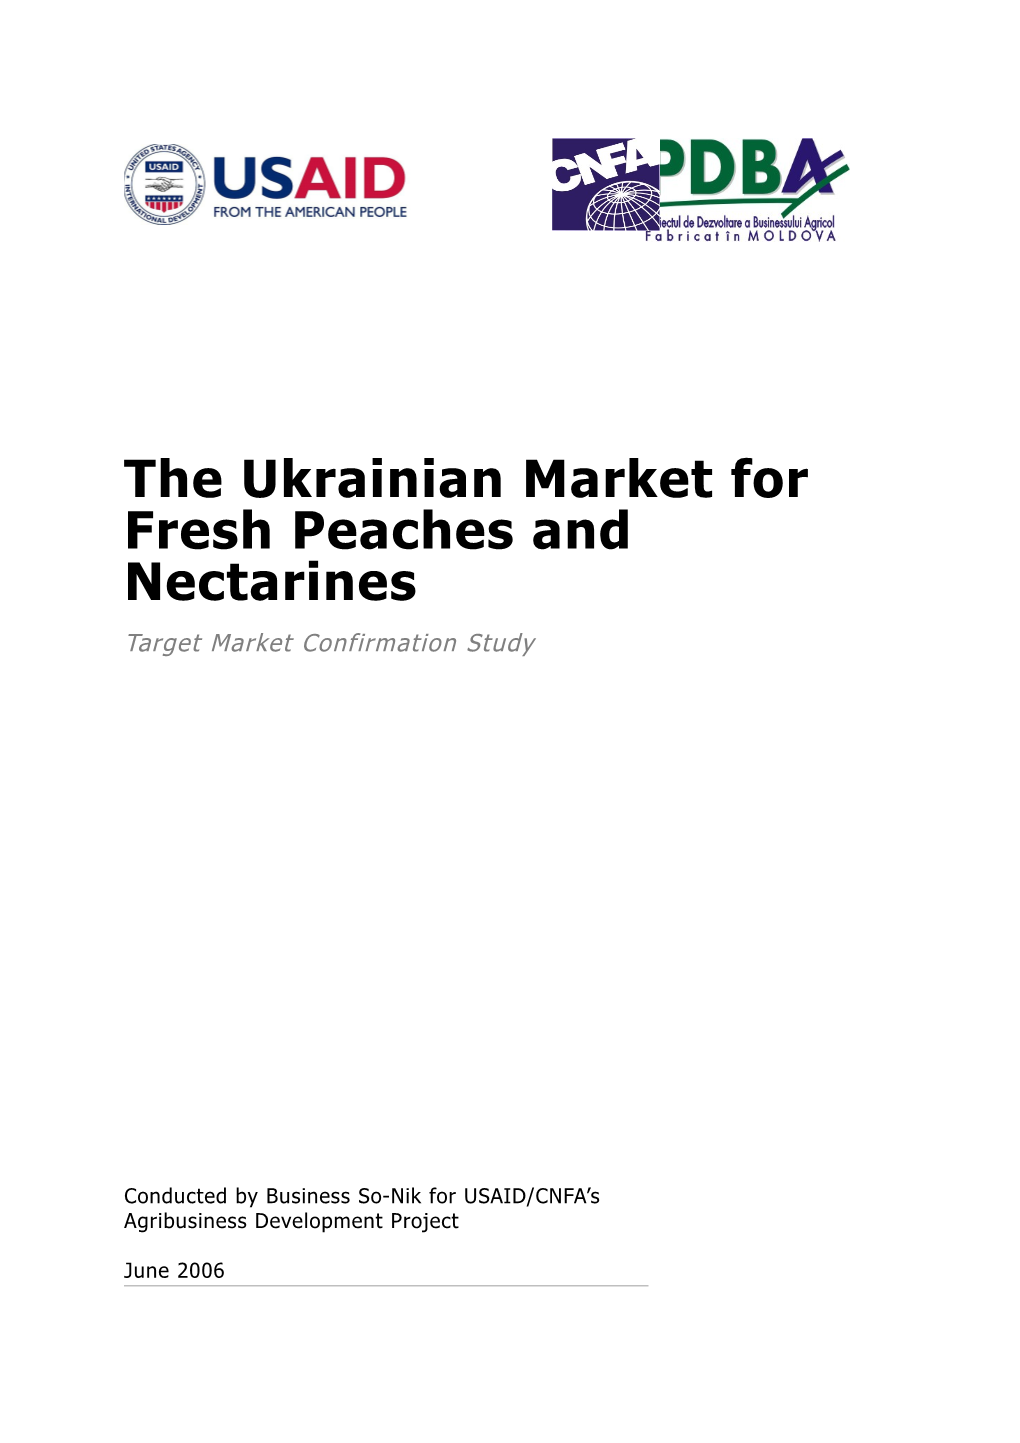 The Ukrainian Market for Fresh Peaches and Nectarines